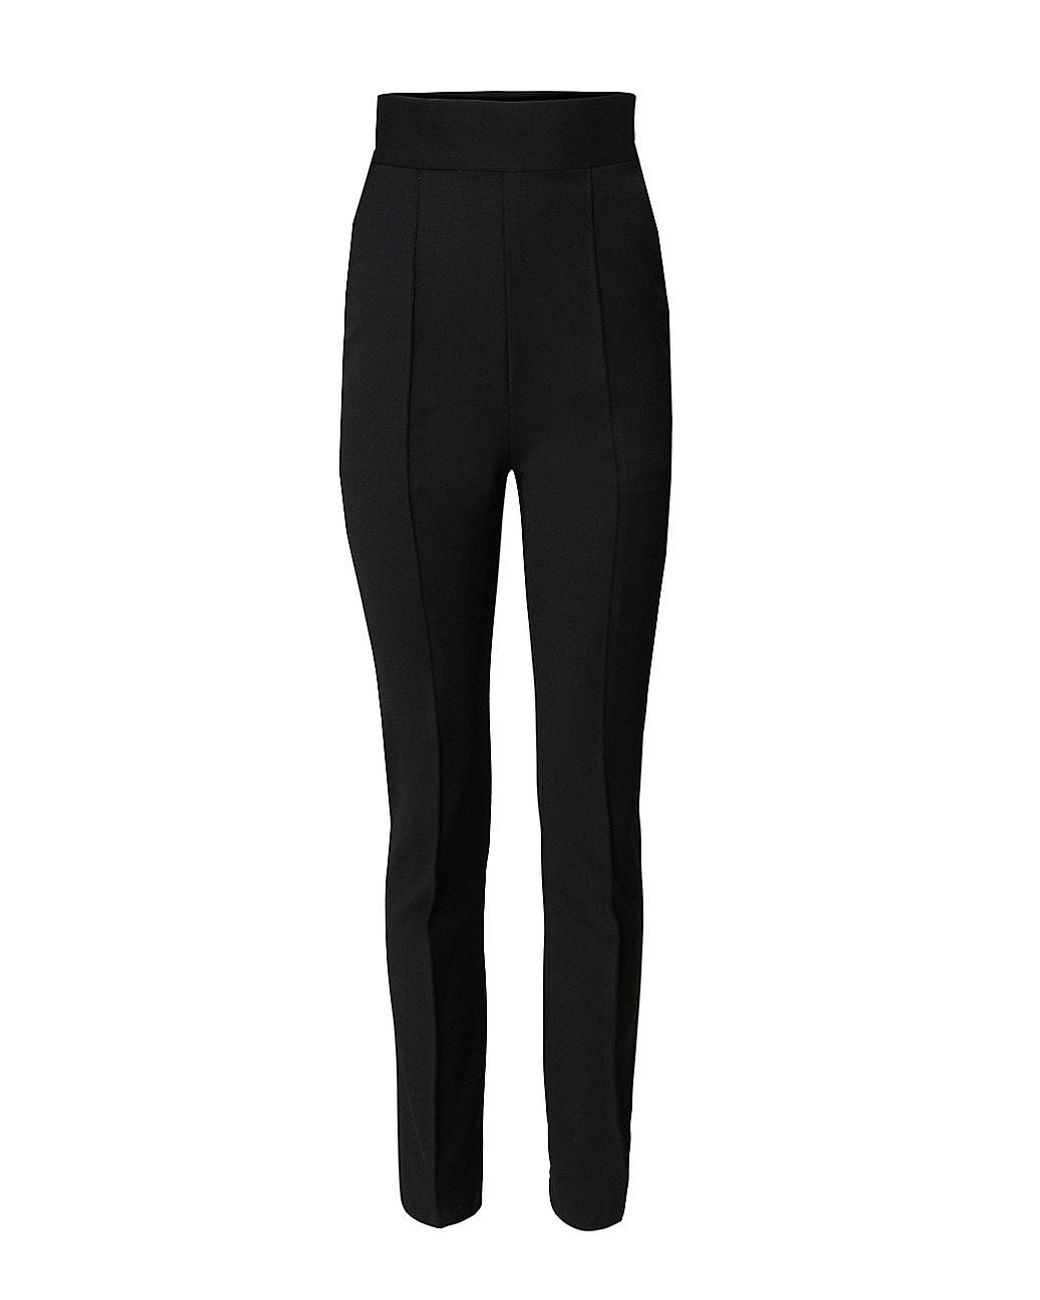 Carolina Herrera Wool High-waist Skinny Pants in Black | Lyst